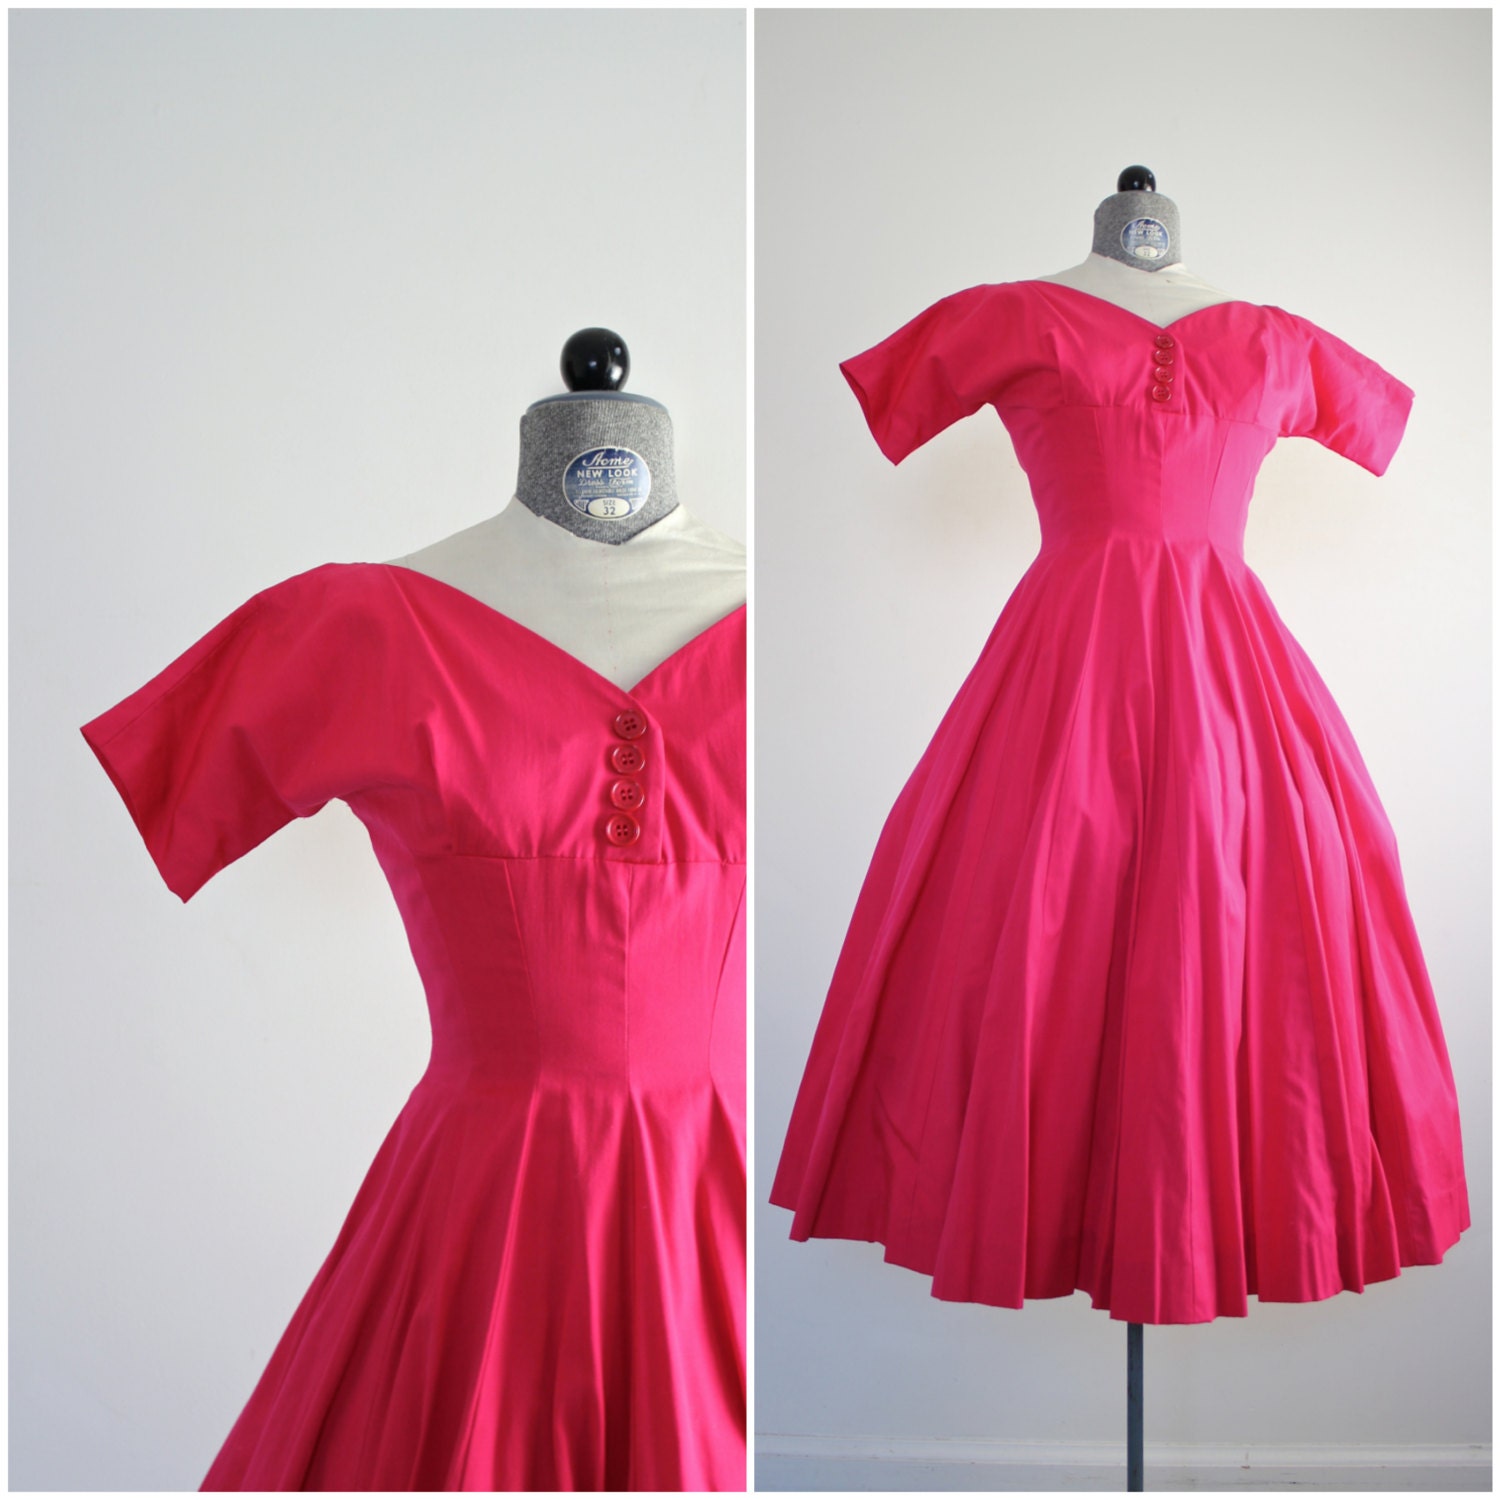 Anne Fogarty Dress 50s Dress 1950s Dress Pink 1950s